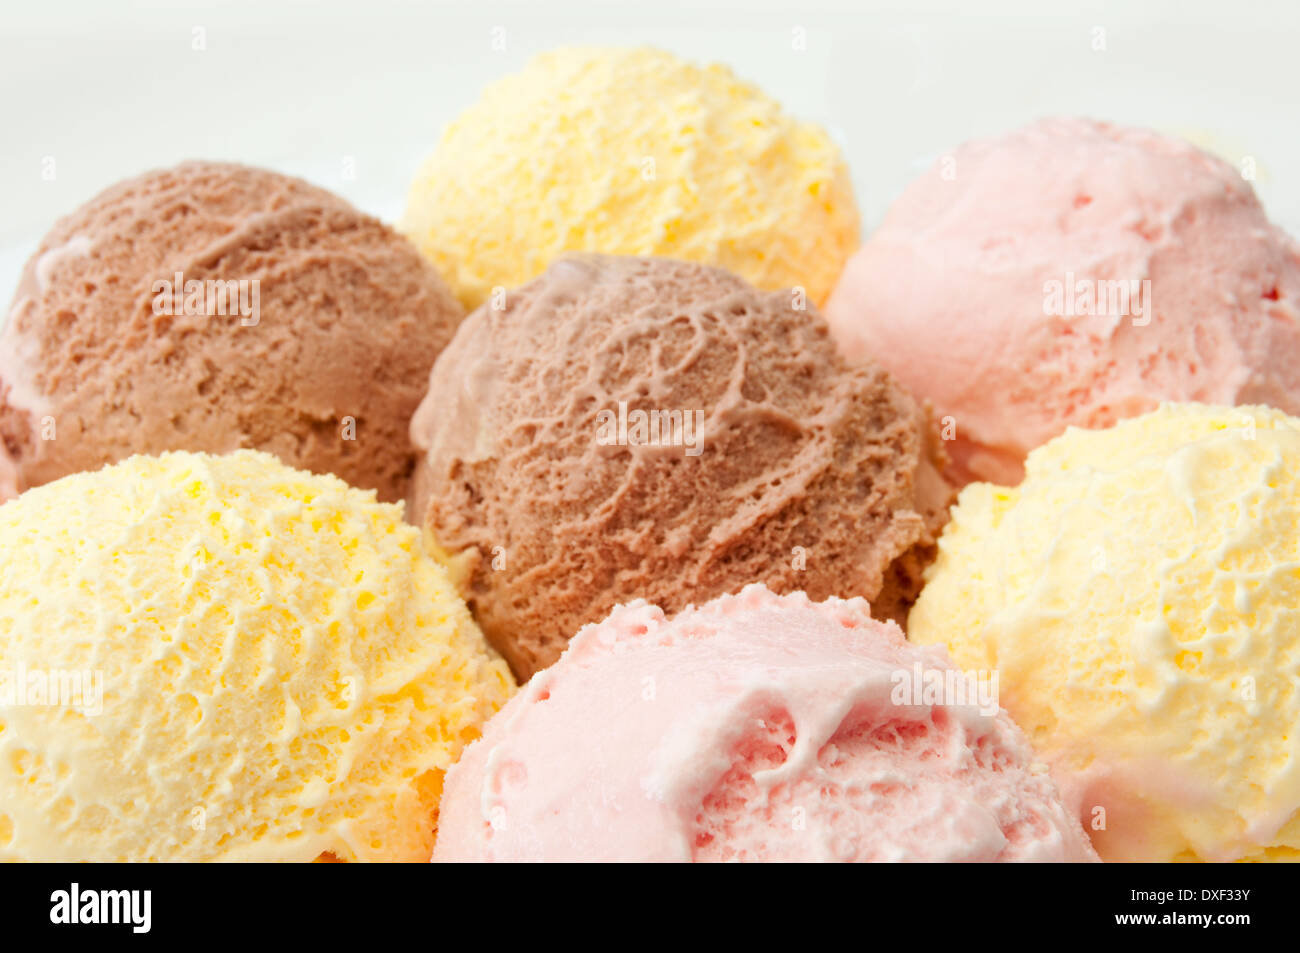 Icecream scoops with chocolate, vanilla and strawberry flavors Stock Photo